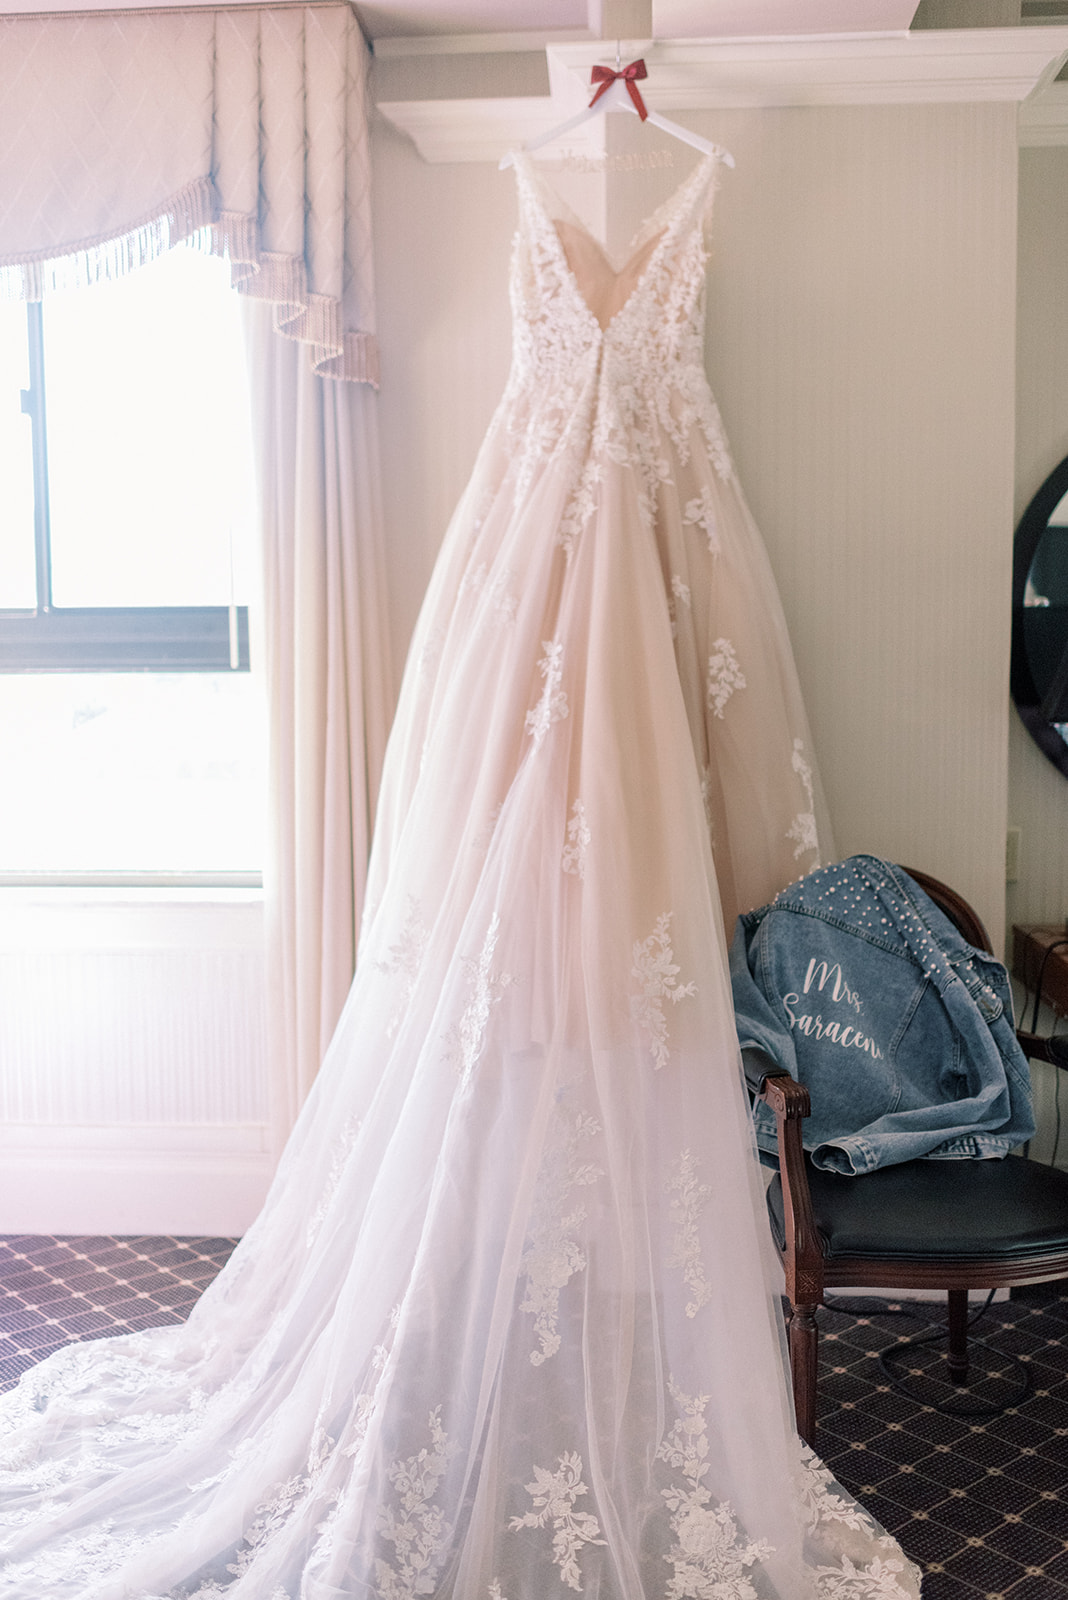 Pennsylvania wedding photographer captures wedding gown hanging